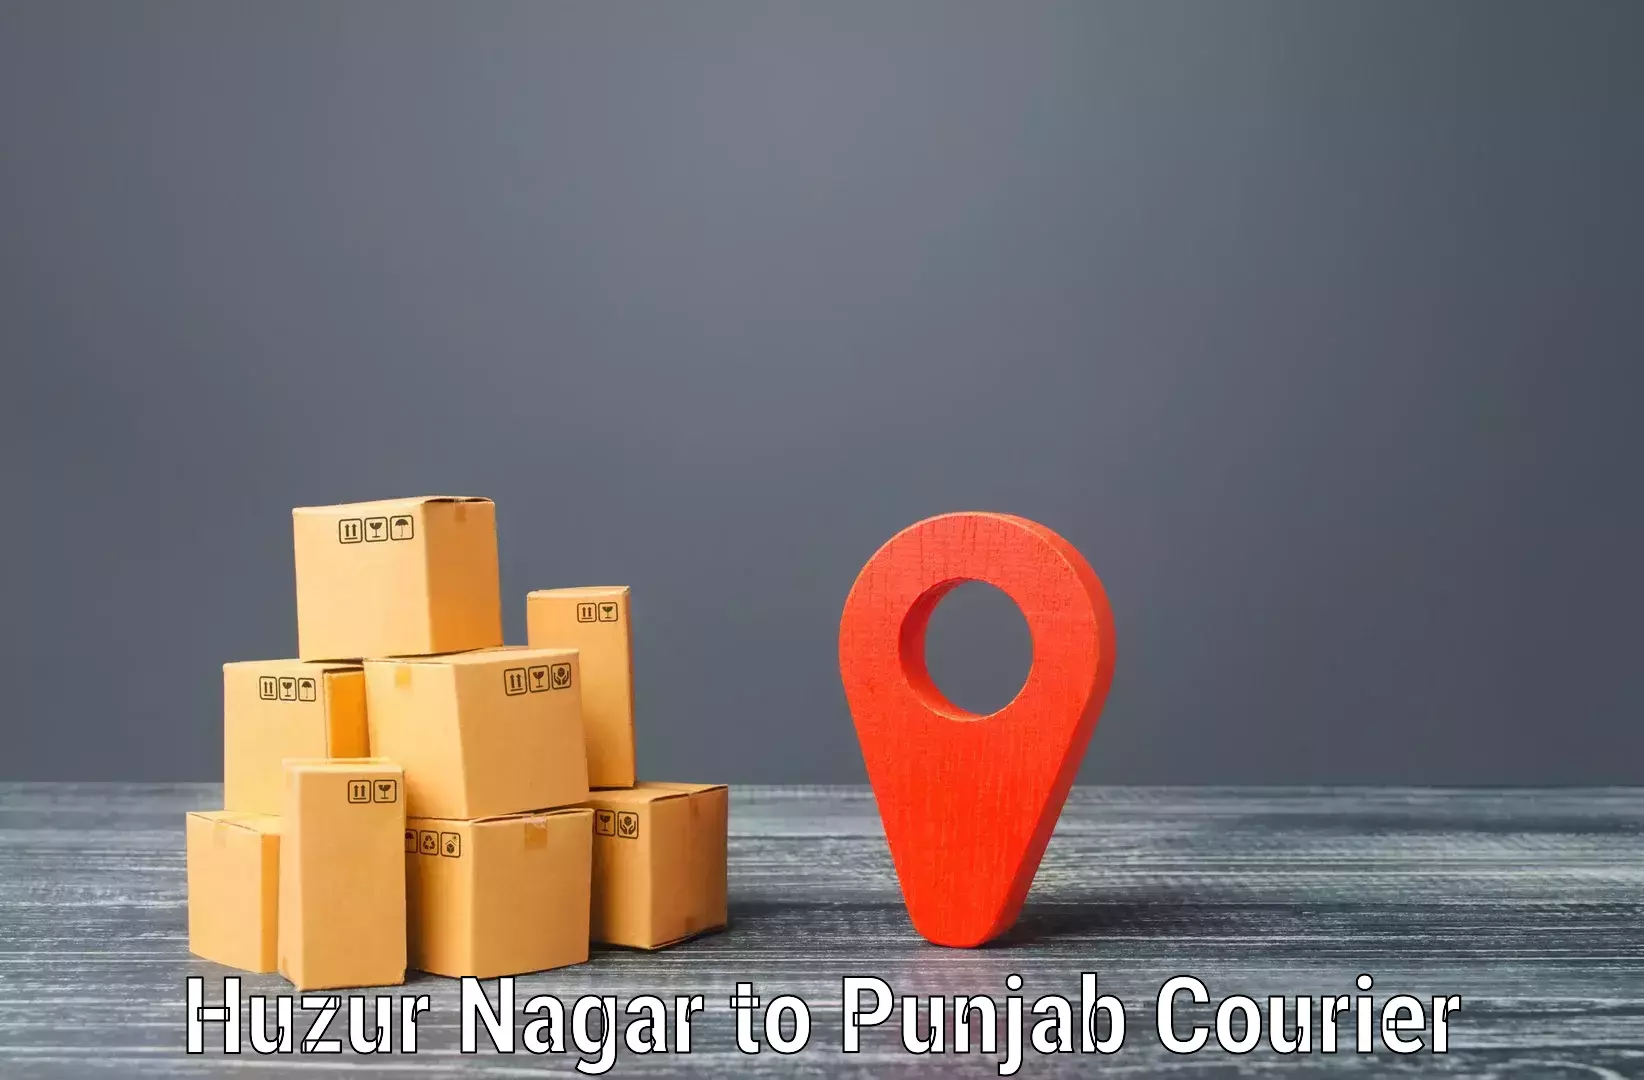 Personalized courier experiences Huzur Nagar to Sirhind Fatehgarh